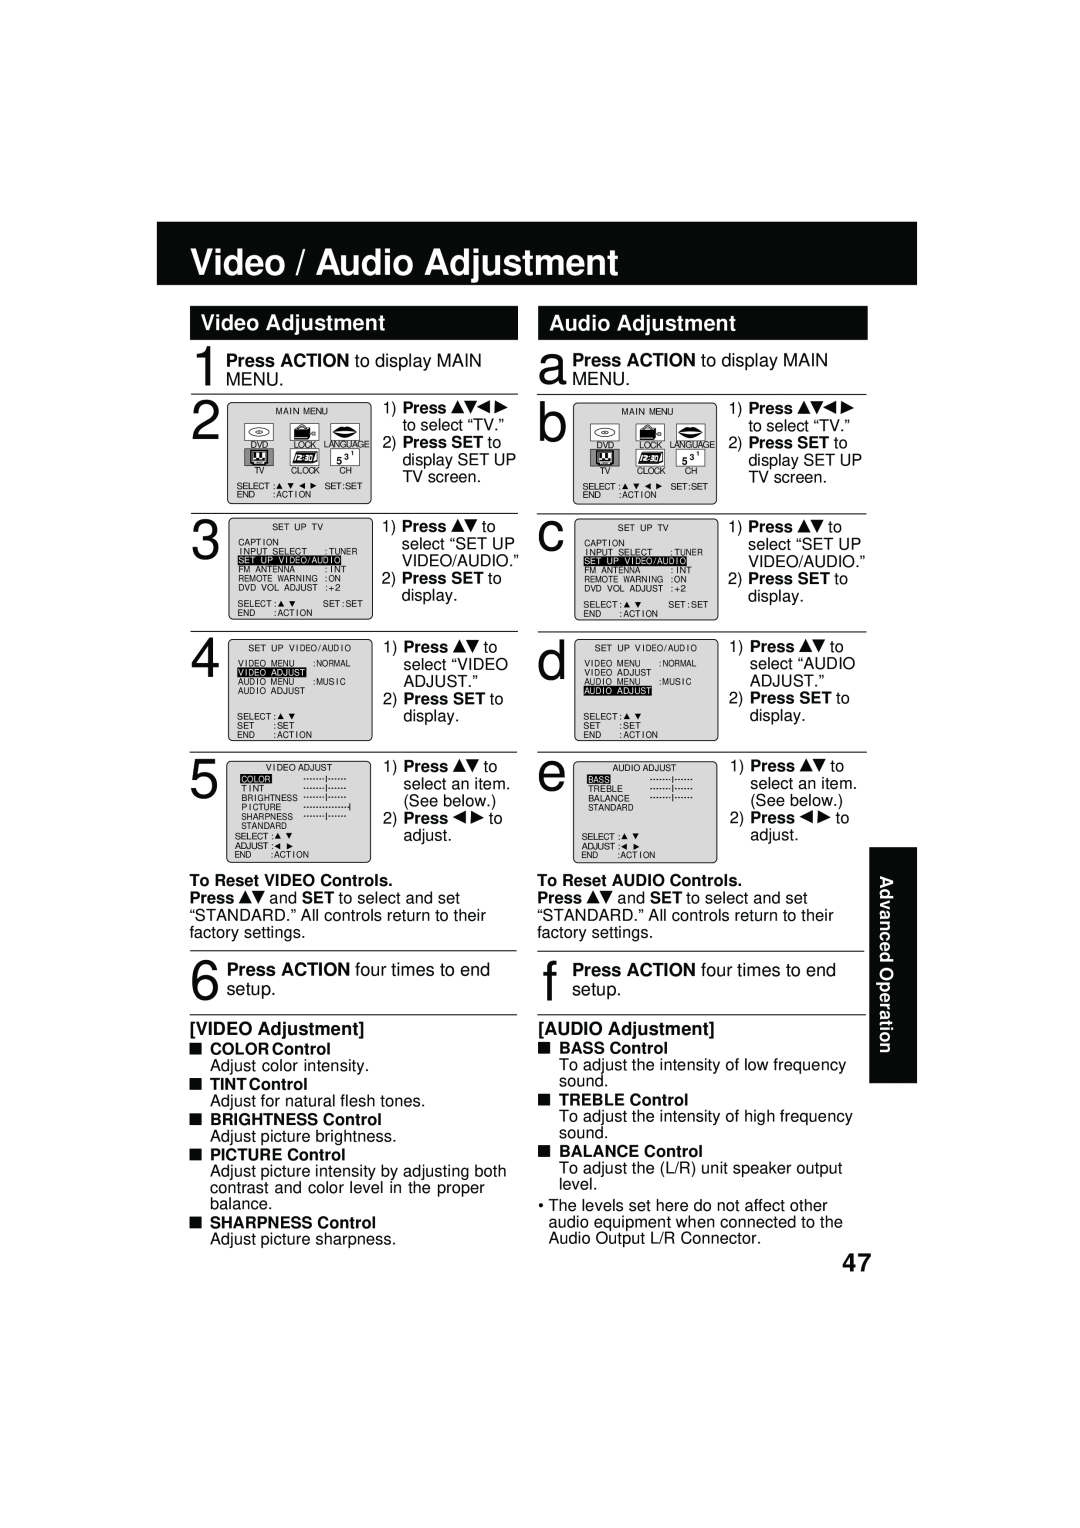 Panasonic PV DM2092 Video / Audio Adjustment, Video Adjustment, Press ACTION to display MAIN, 1MENU, VIDEO Adjustment 